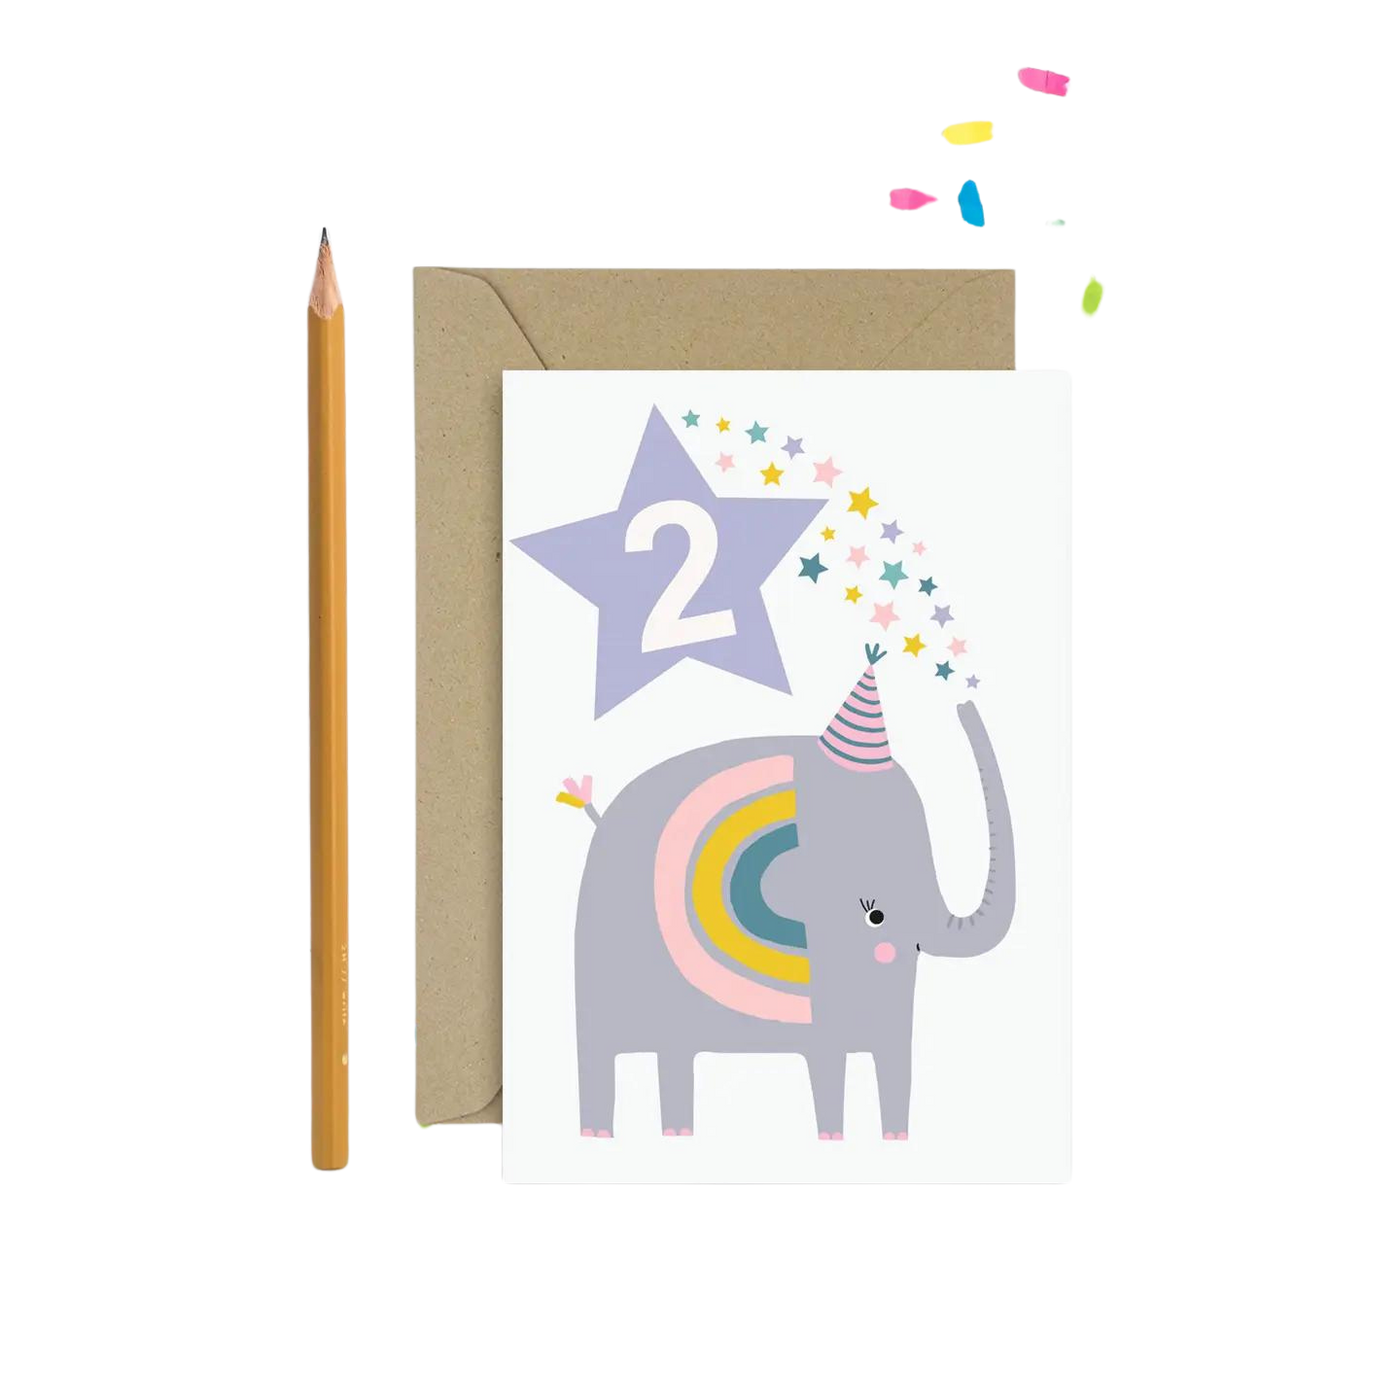 Age 2 Elephants Purple Kid's Birthday Card - Greeting Cards - Edie & Eve